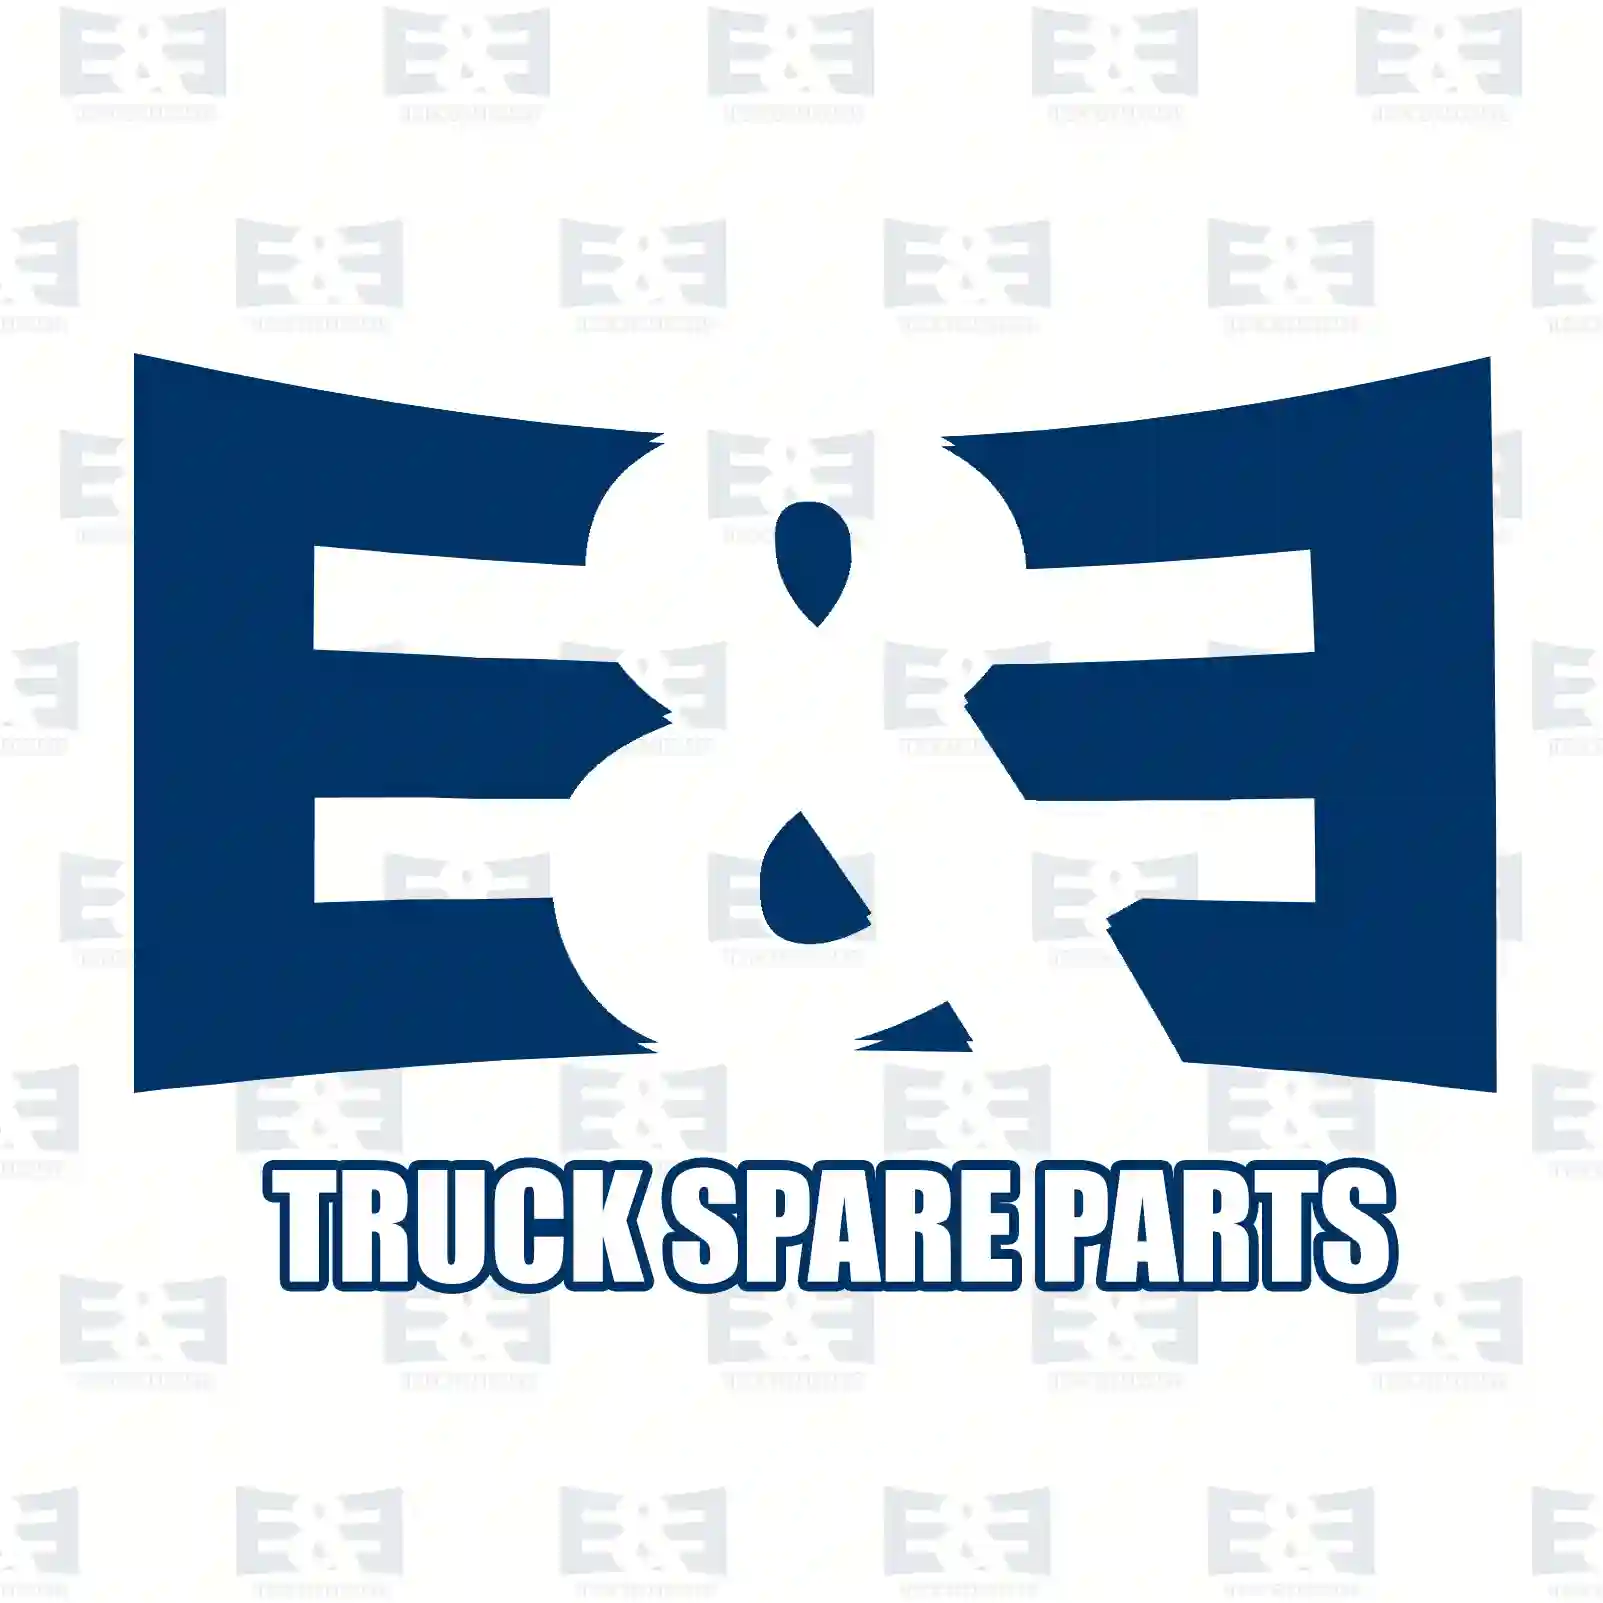 Air spring, 2E2282852, B-14486, , , , , , , , , ||  2E2282852 E&E Truck Spare Parts | Truck Spare Parts, Auotomotive Spare Parts Air spring, 2E2282852, B-14486, , , , , , , , , ||  2E2282852 E&E Truck Spare Parts | Truck Spare Parts, Auotomotive Spare Parts